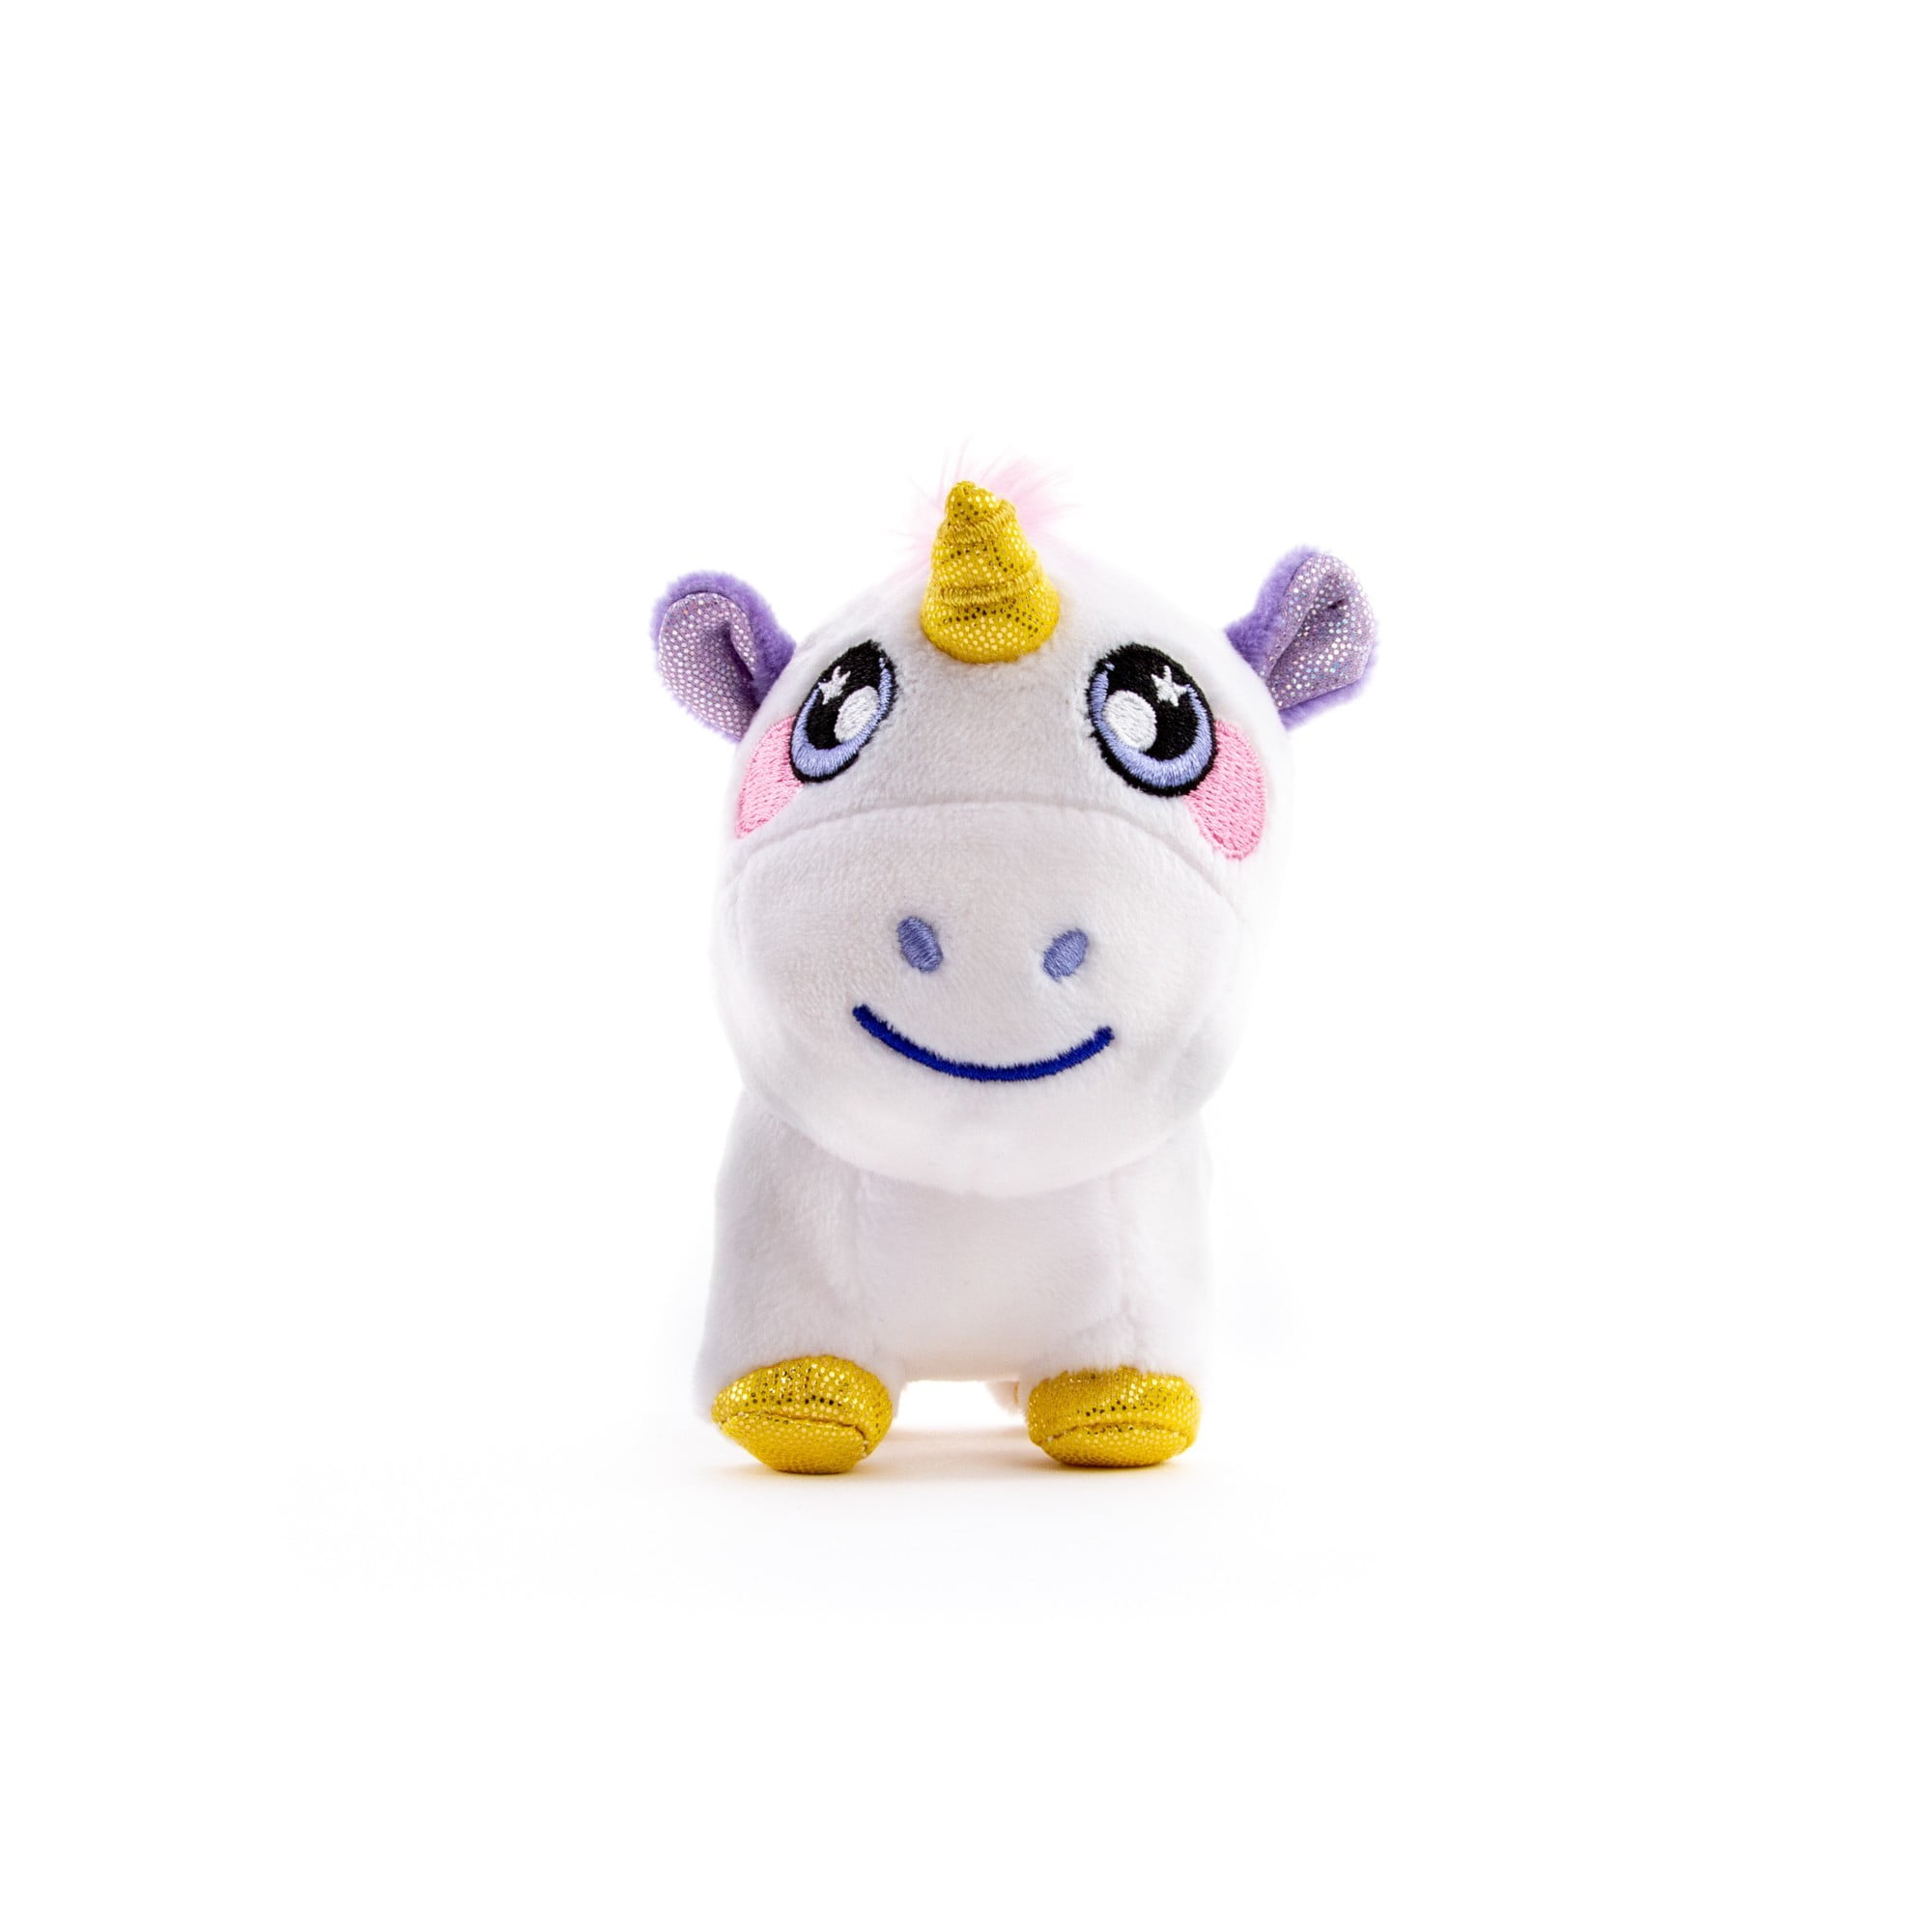 Squeezamals Squish White and Purple Unicorn Stuffed Animal Plush Series 2 for sale online 